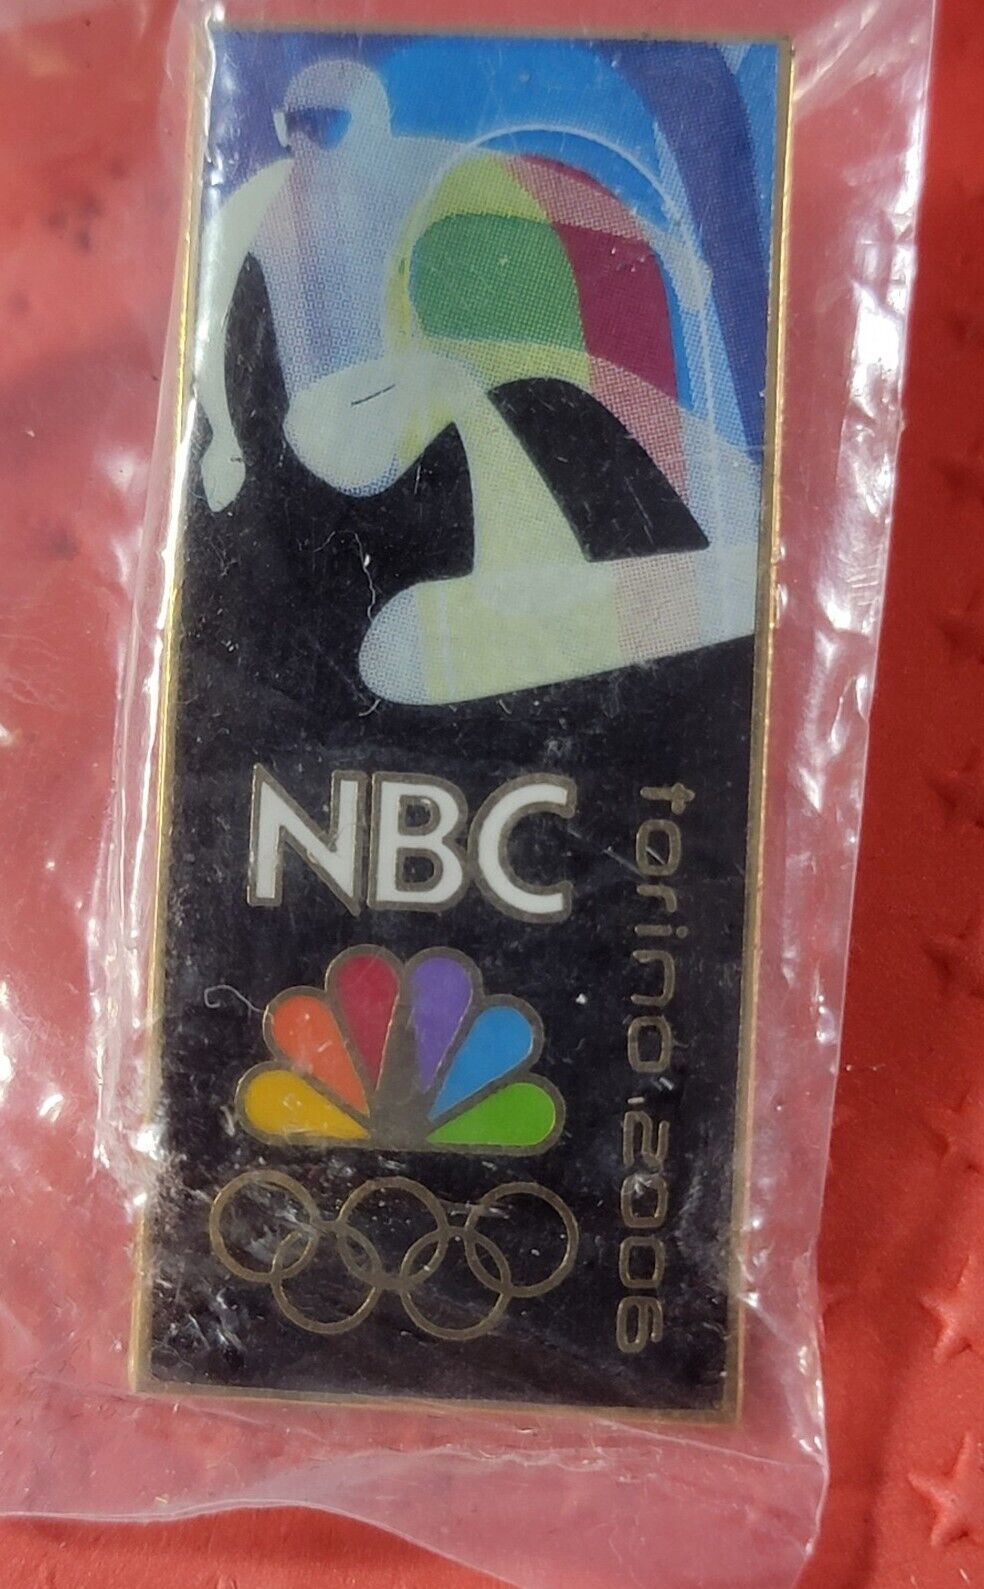 Torino 2006 Olympics Snowboarding Pin NBC Lapel Hat Pin